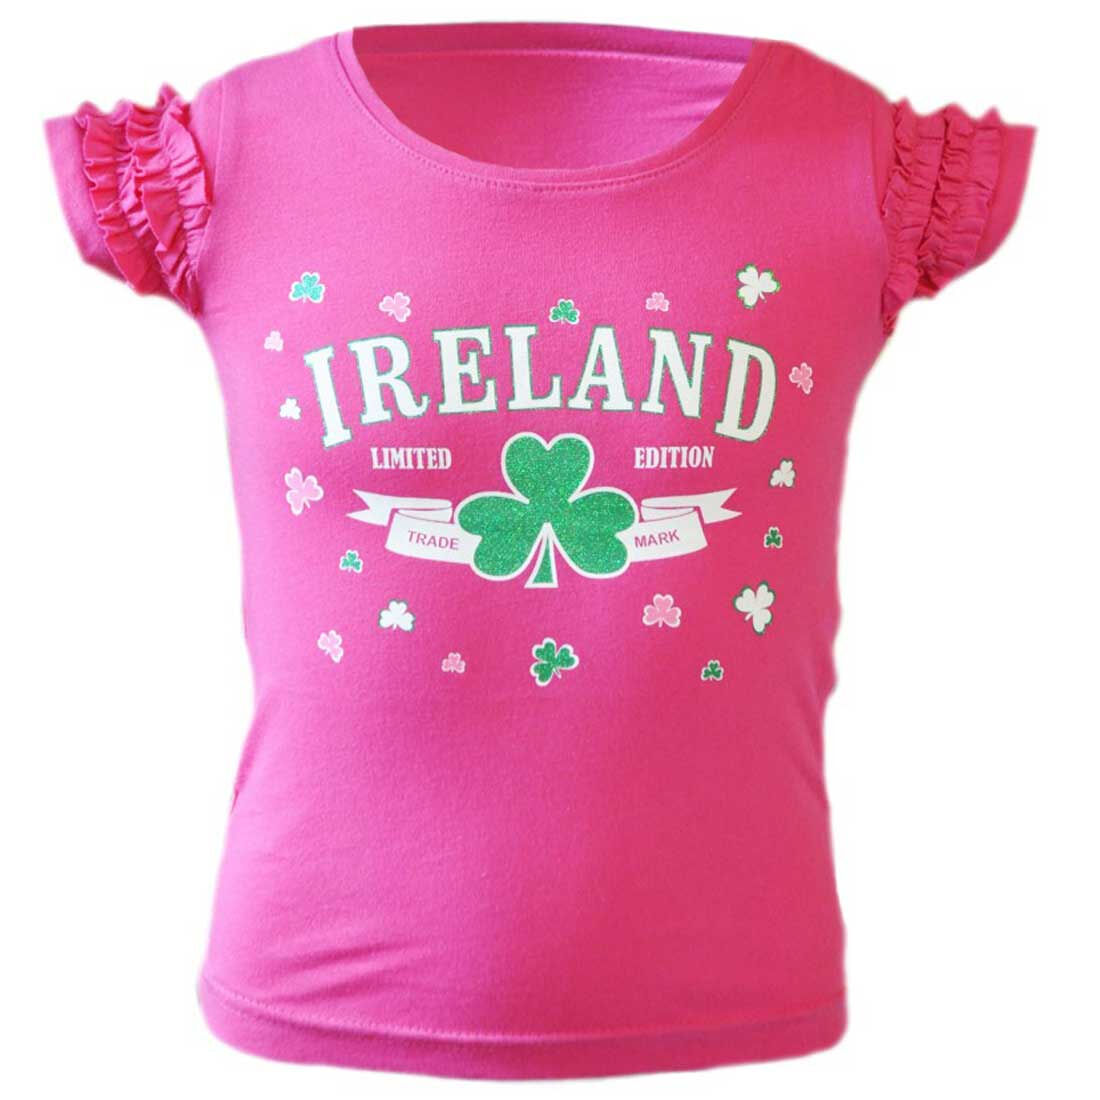 Carrolls Irish Gifts White Baby T-Shirt with Sheep Holding A Shamrock Design & Ireland Text 